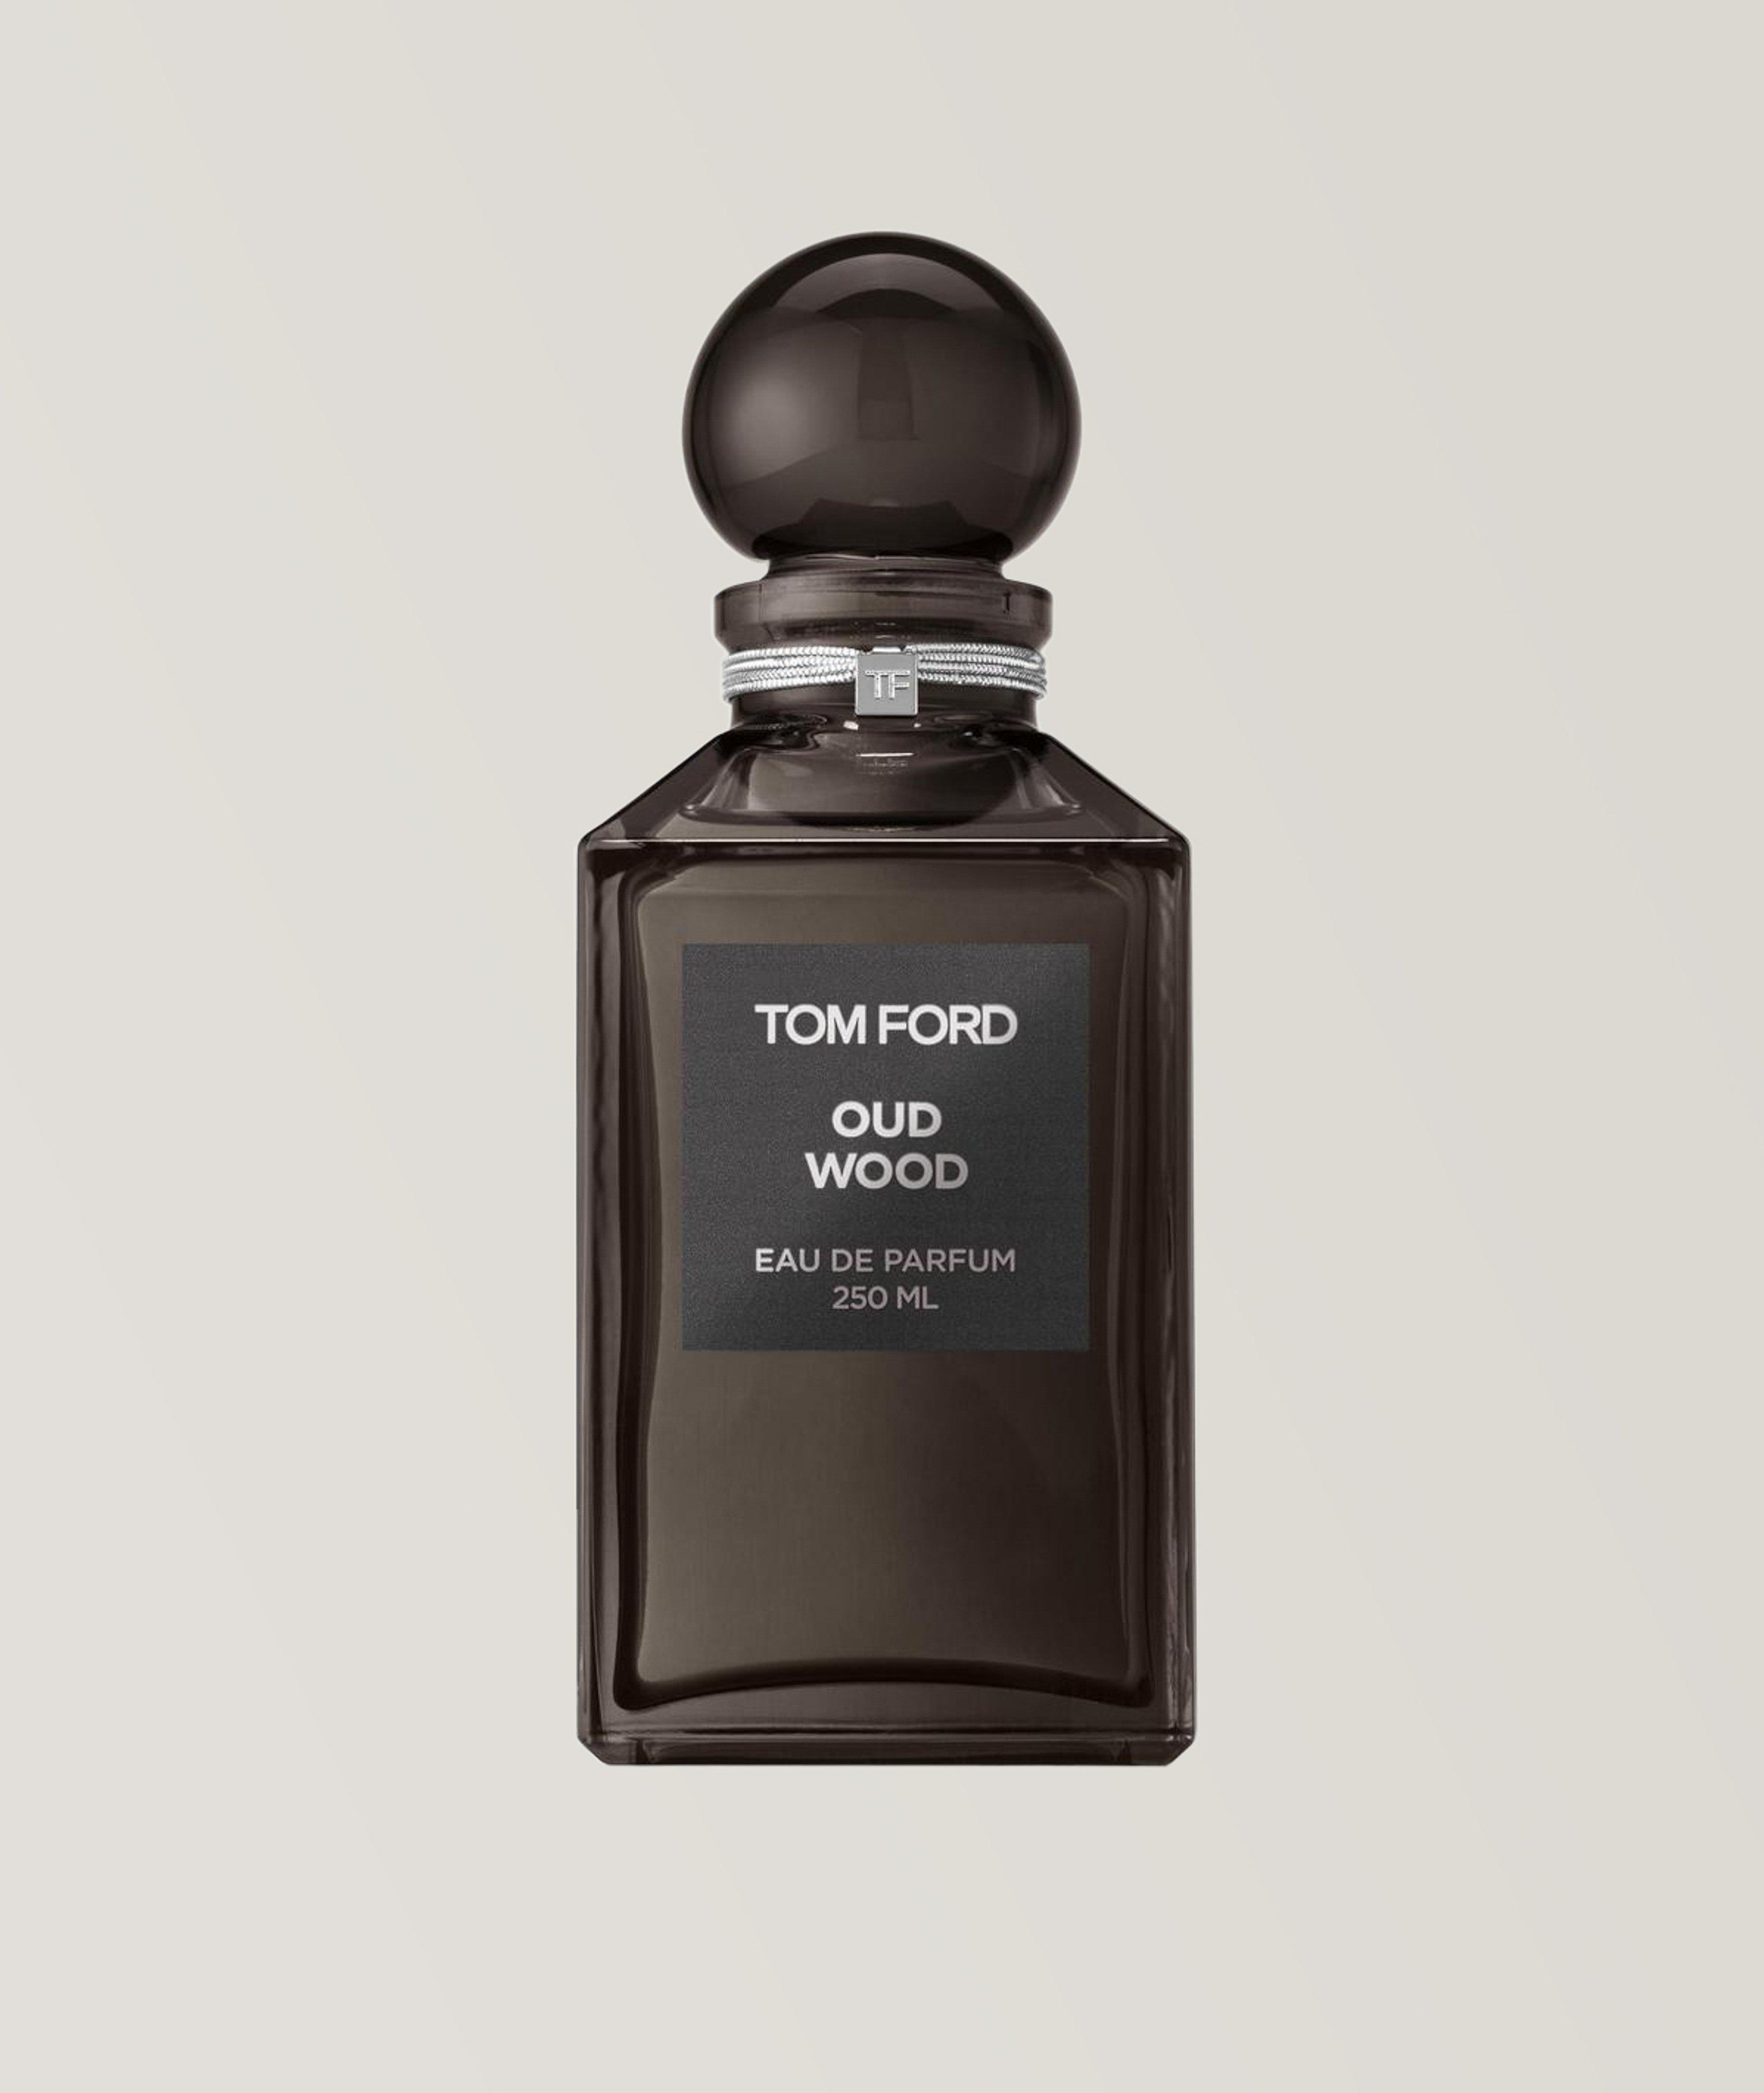 TOM FORD Eau de parfum Oud Wood (250 ml)